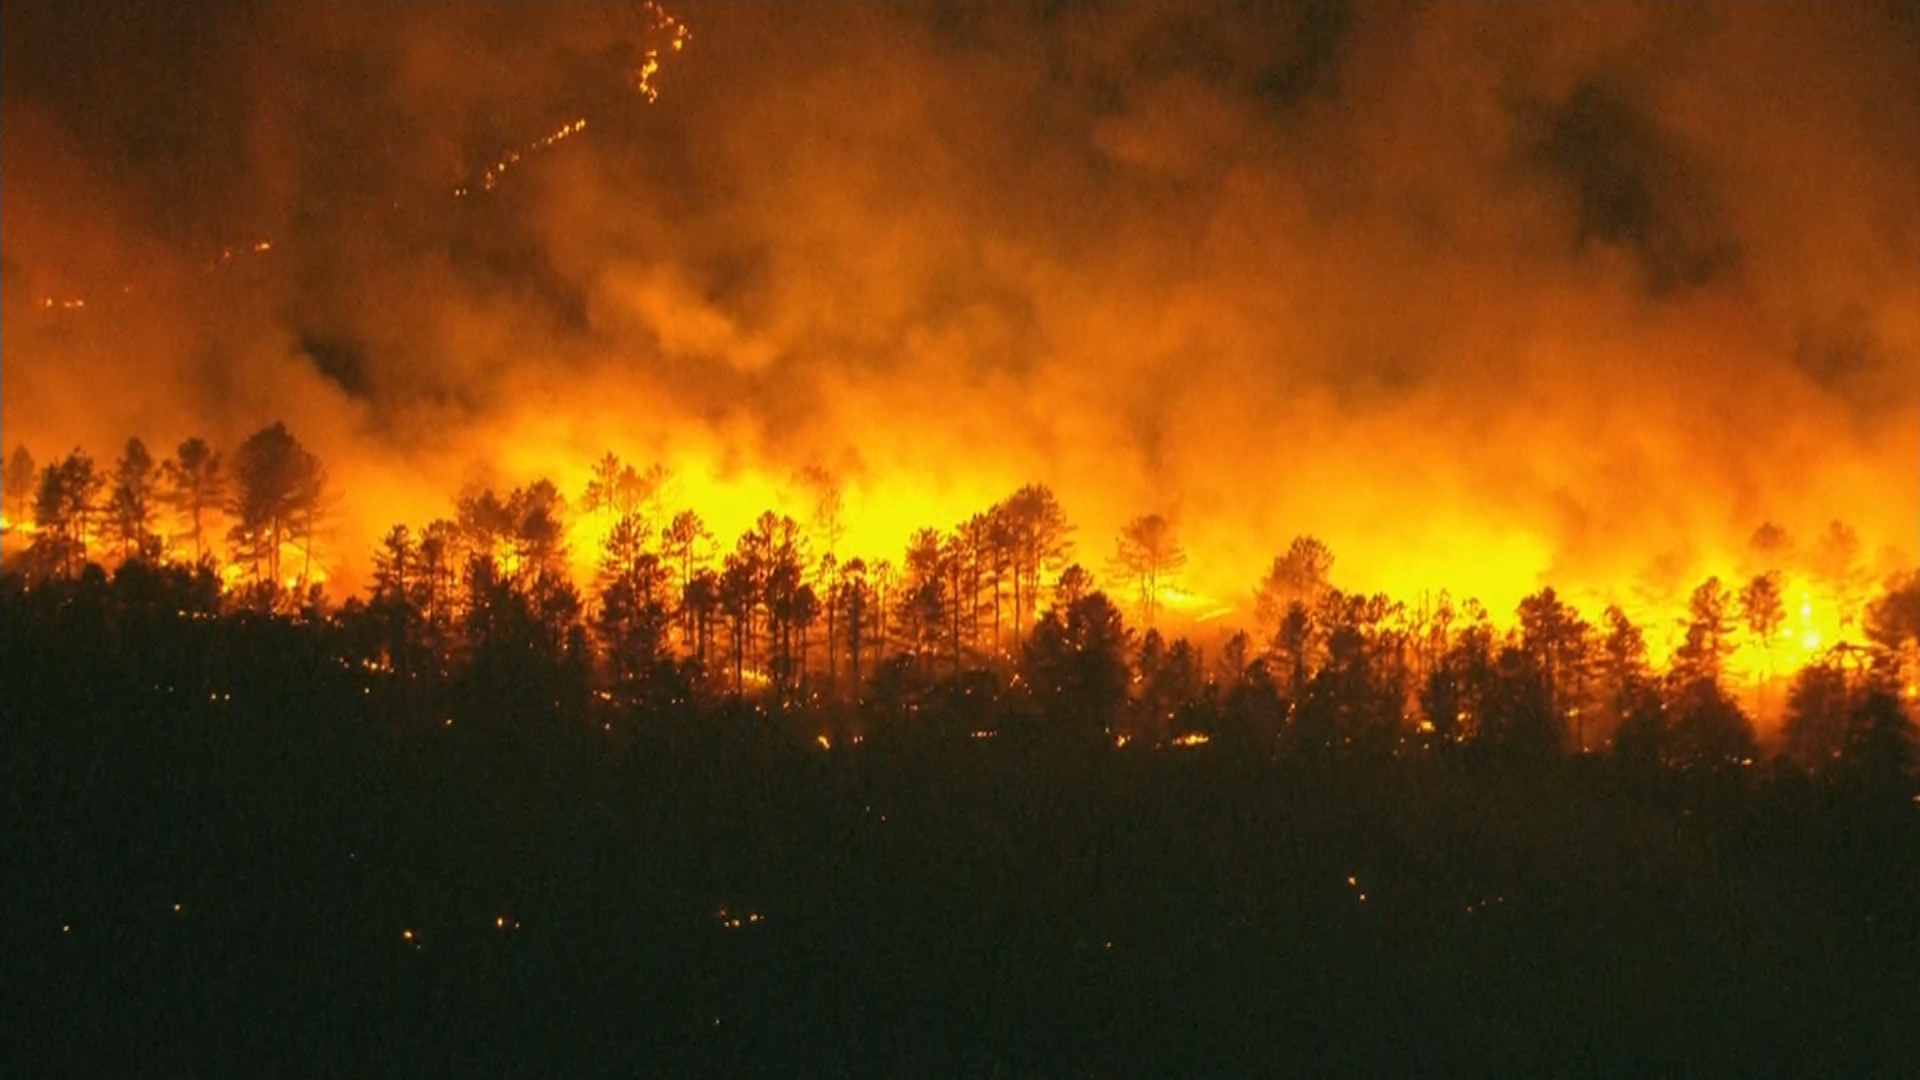 Kebakaran Hutan Di Hutan Negara Bagian Wharton Di South Jersey Membakar Sedikitnya 7.200 Acre, Memaksa Beberapa Penutupan – CBS Philly